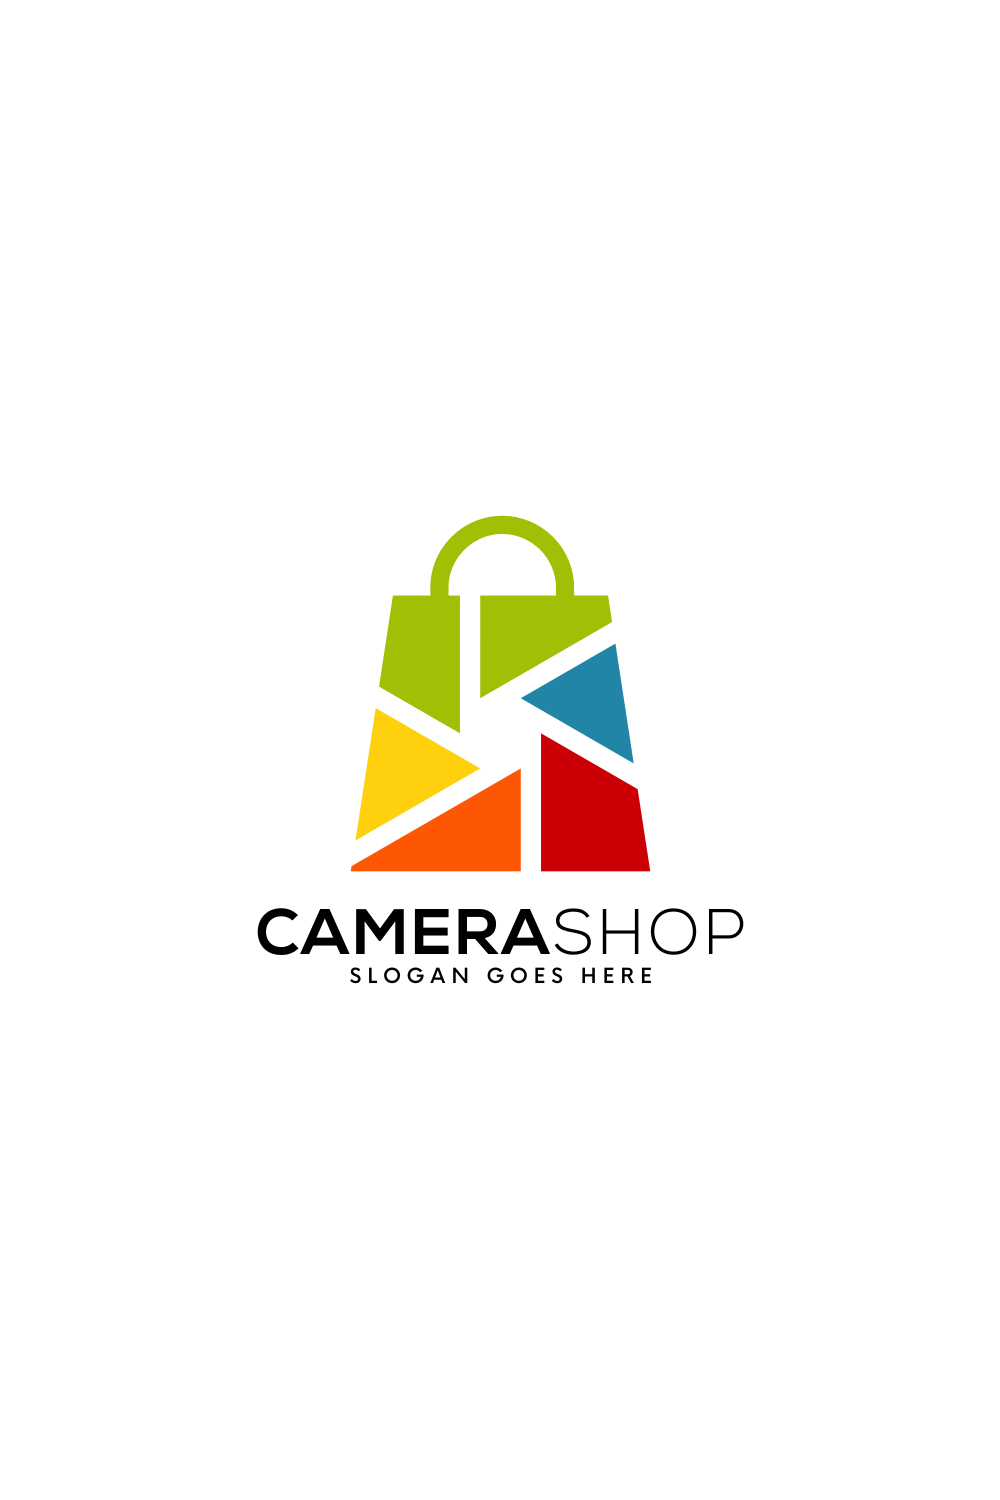 Camera Shop Logo Vector Design pinterest image.